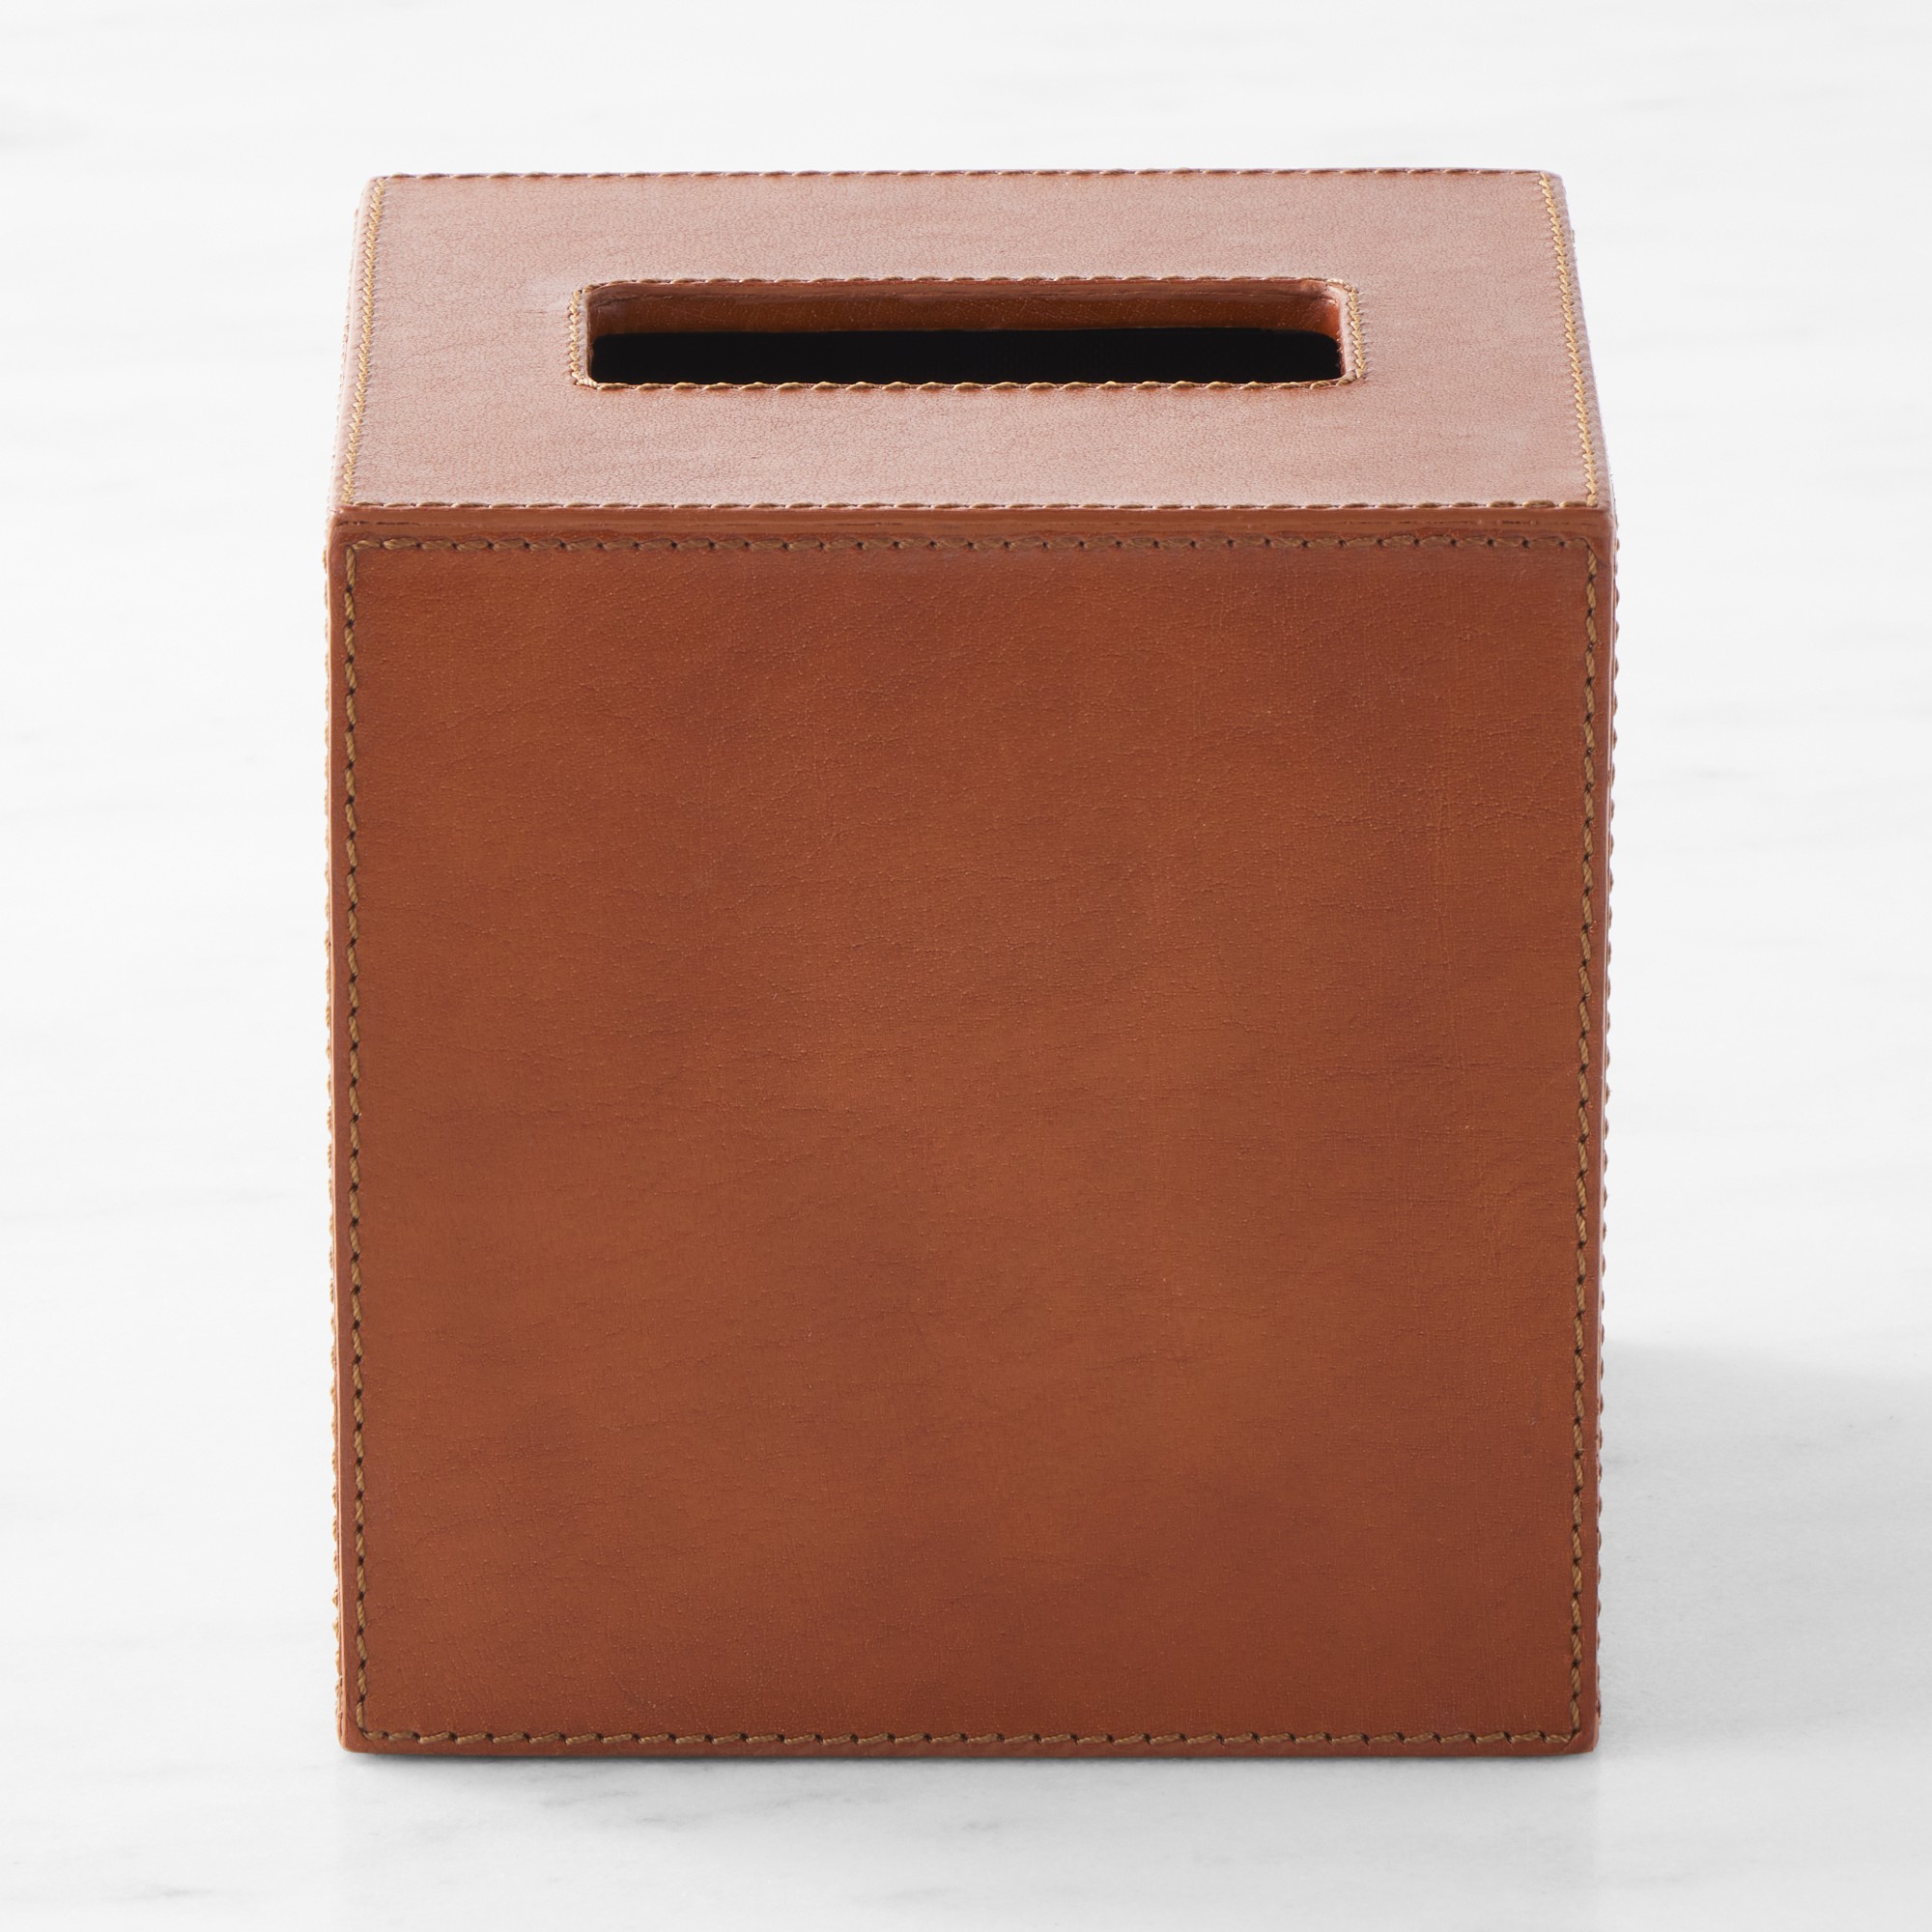 Brown Leather Tissue Box Holder